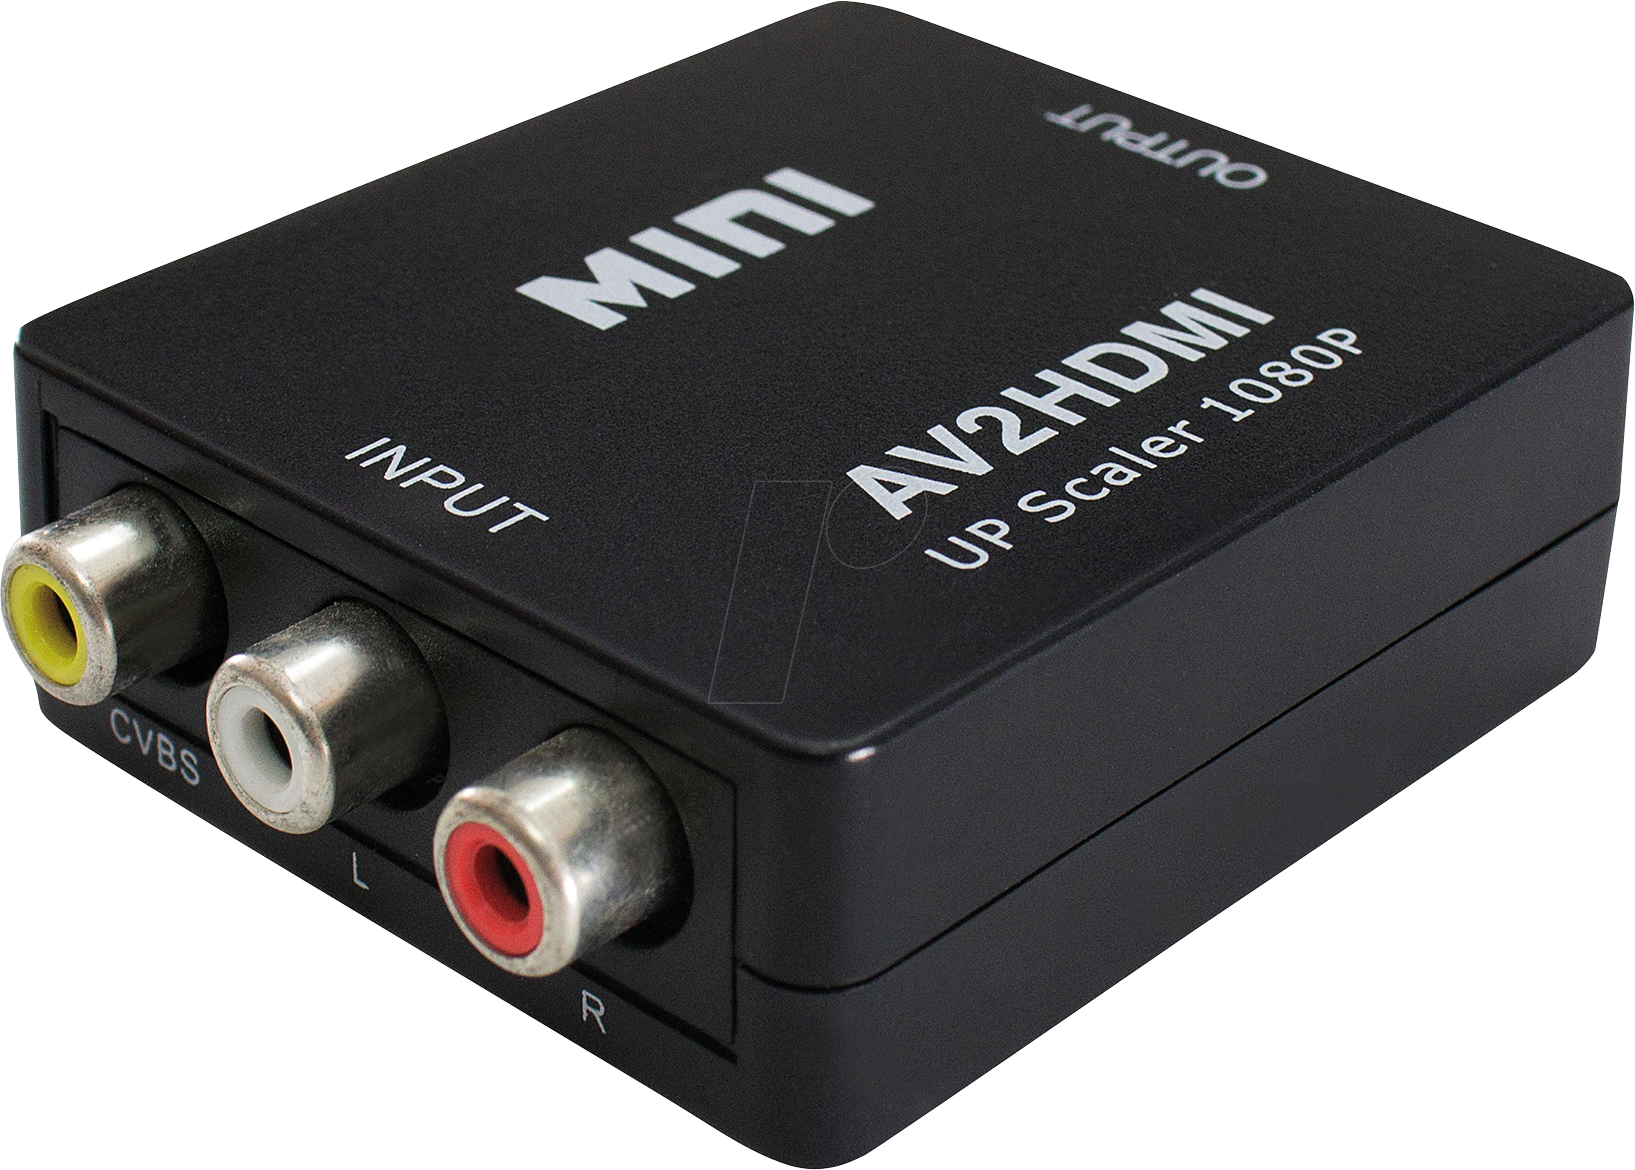 MATR CS37L - AV auf HDMI Konverter, mit Upscaler